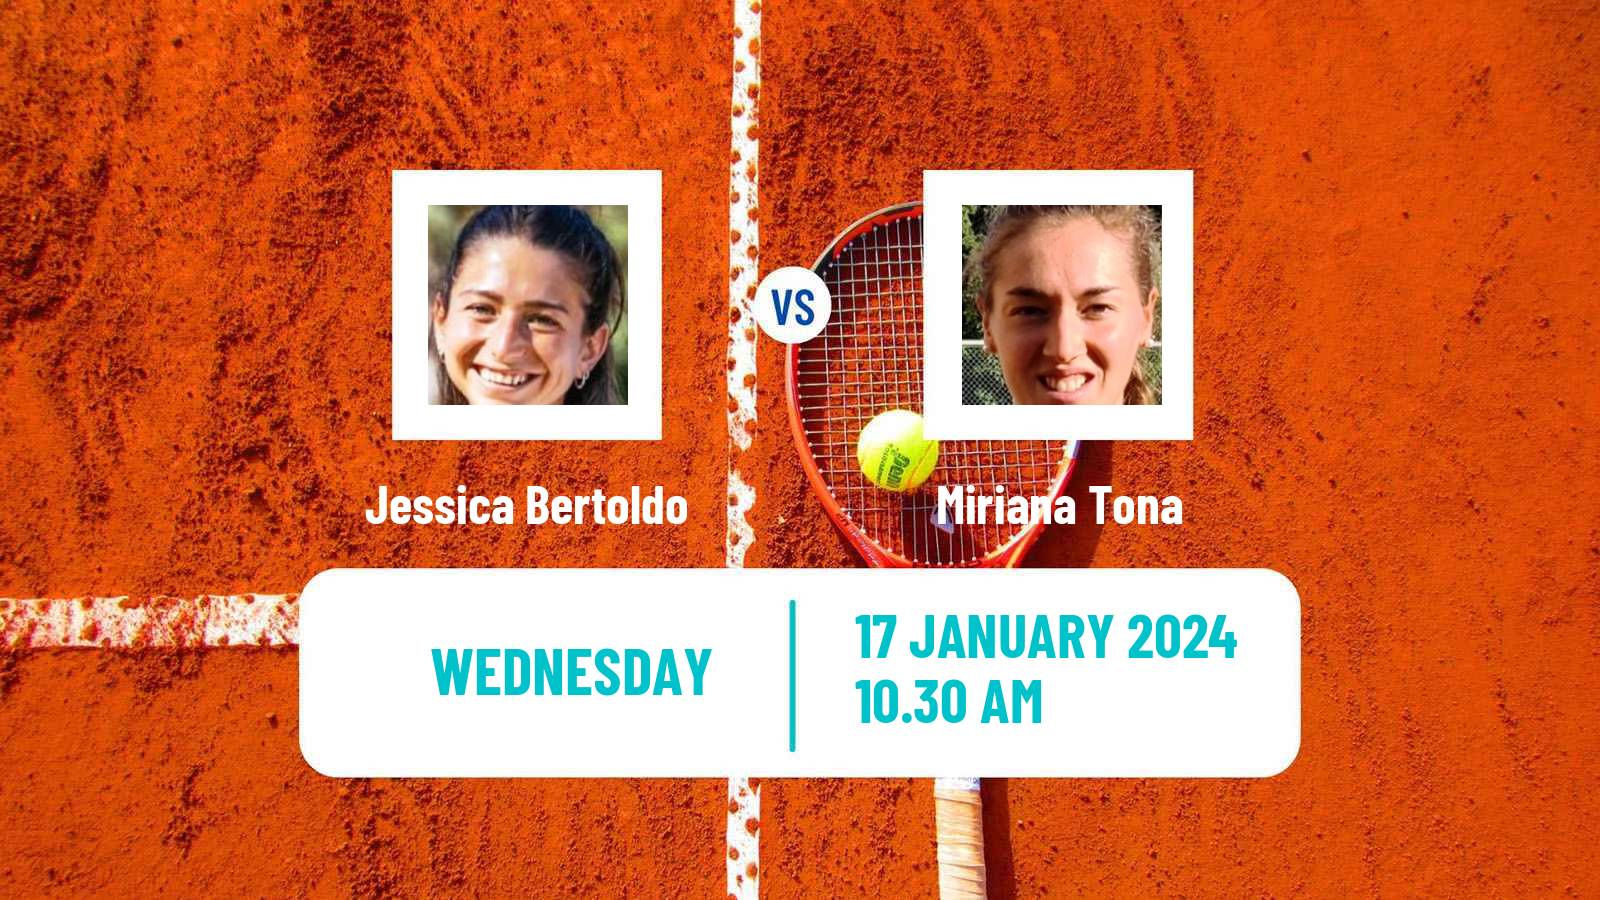 Tennis ITF W35 Buenos Aires Women Jessica Bertoldo - Miriana Tona